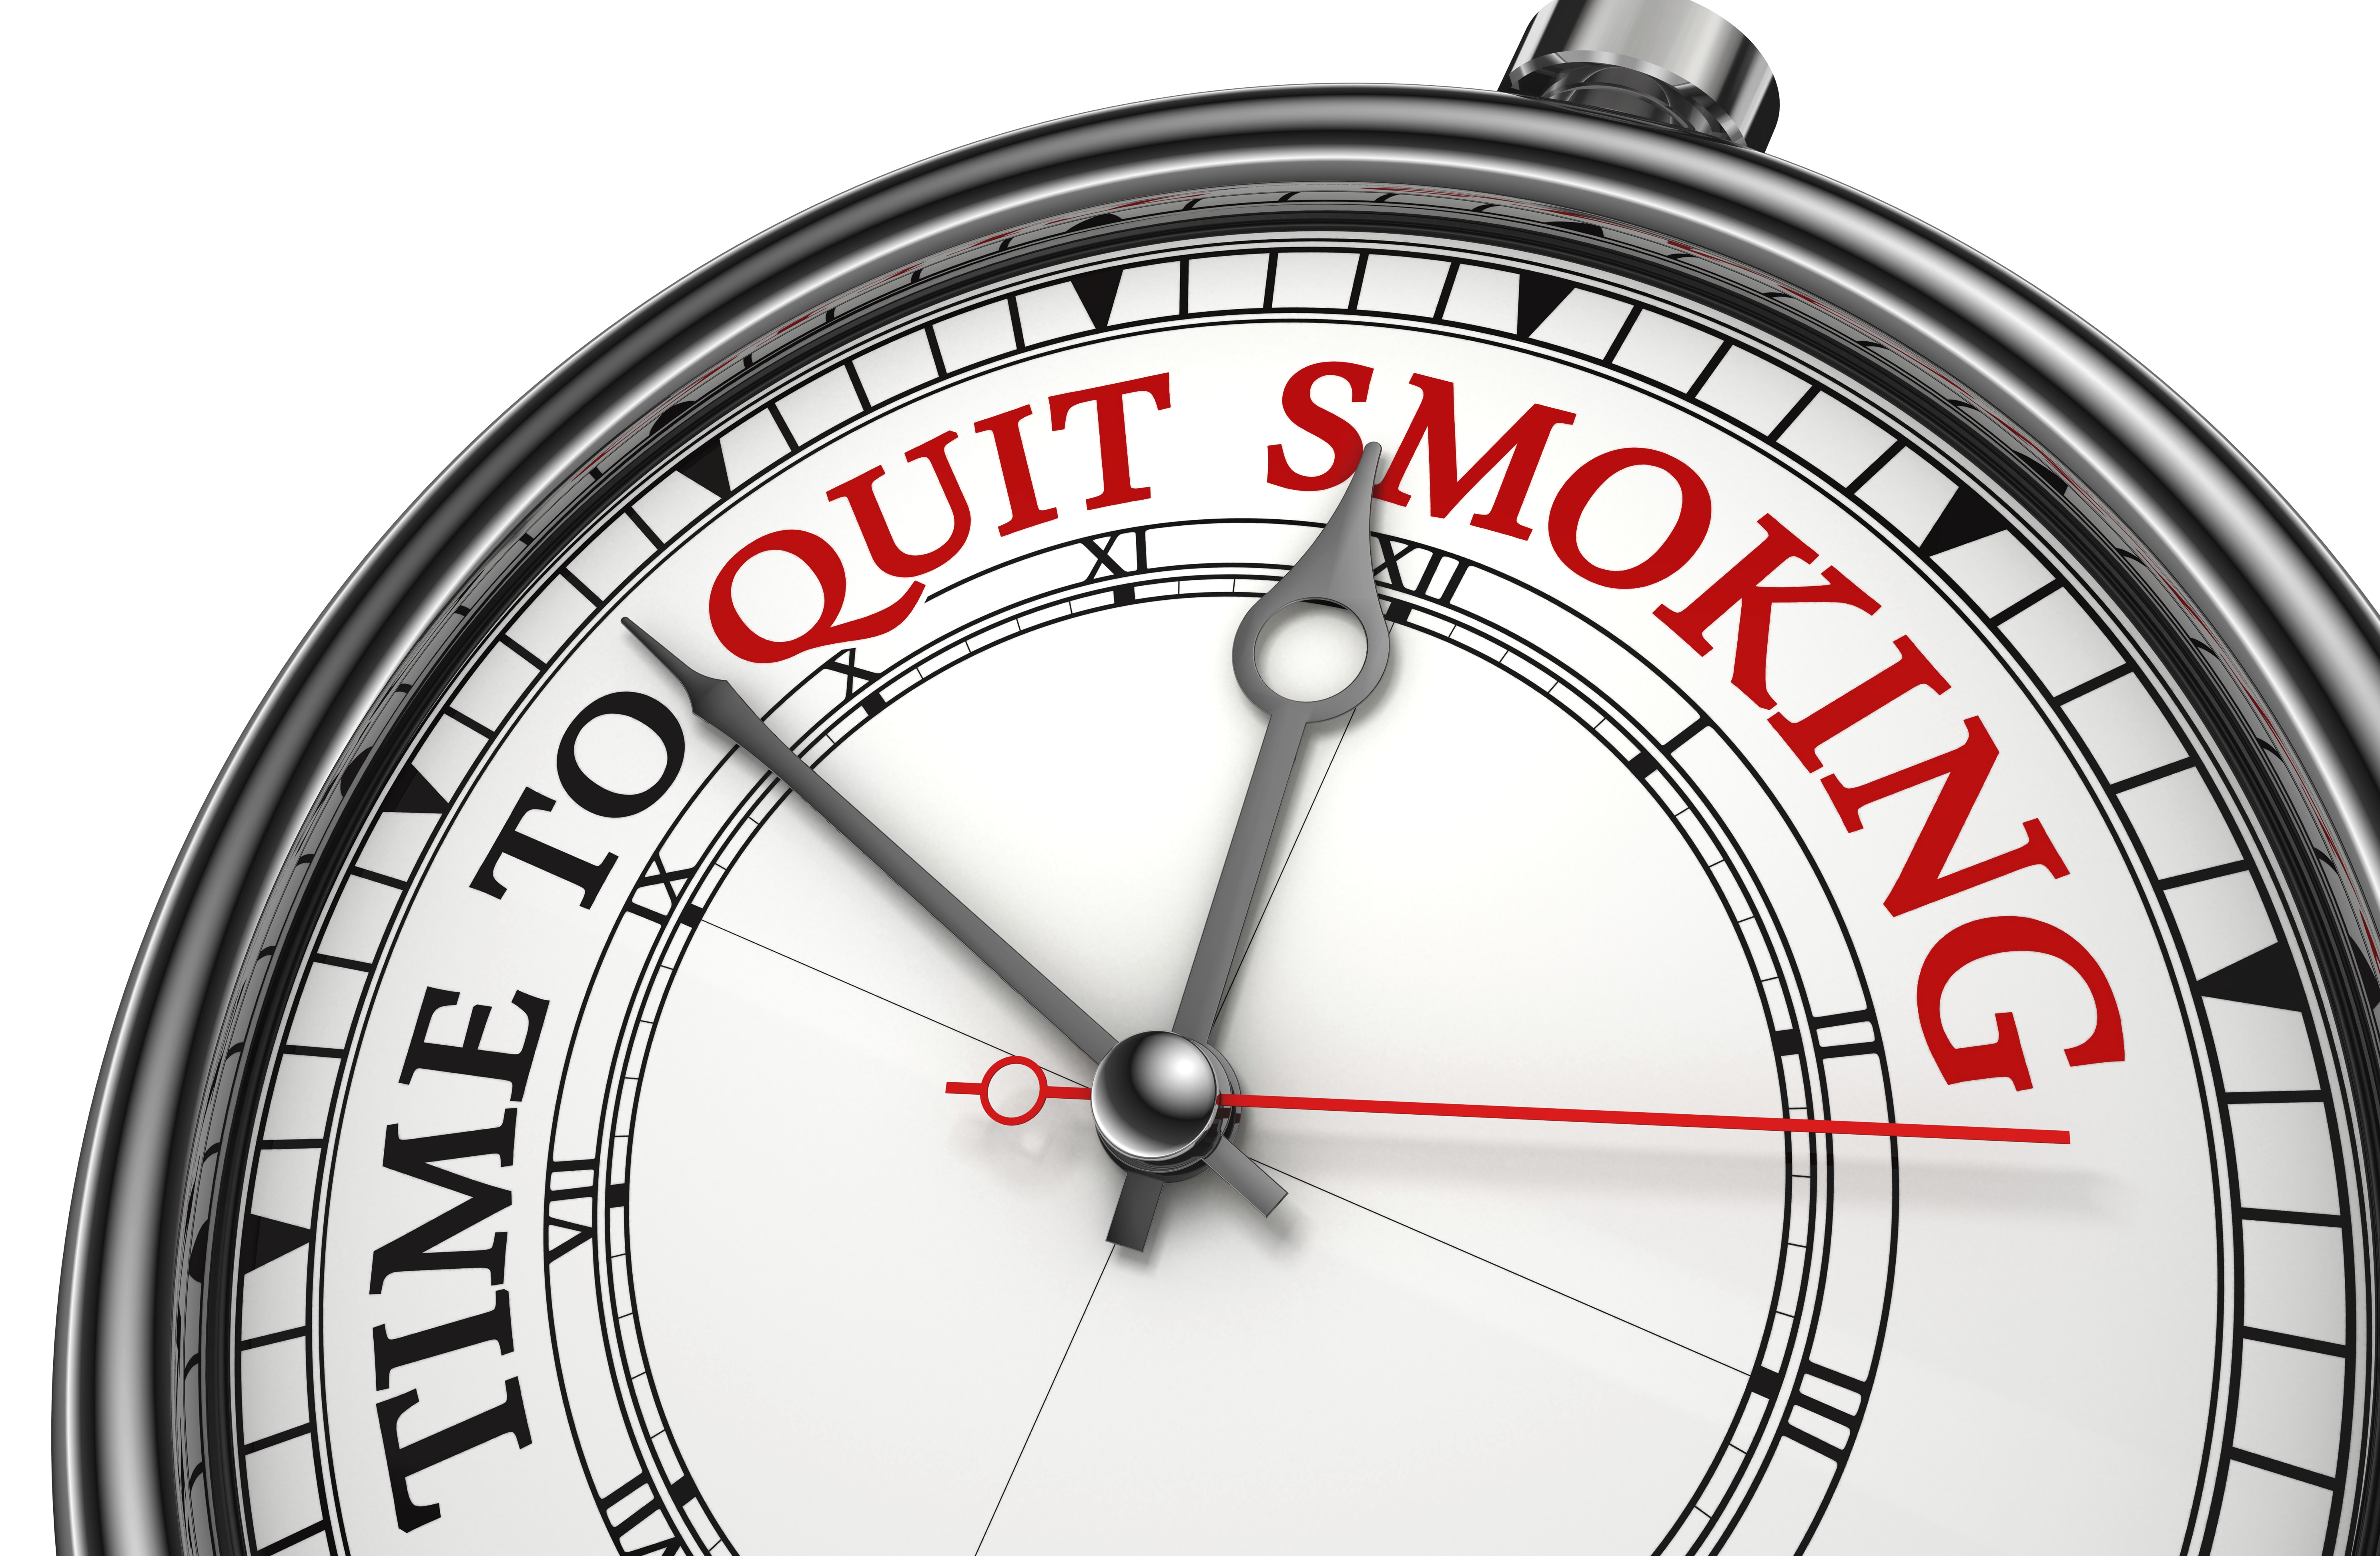 "quit smoking" graphic